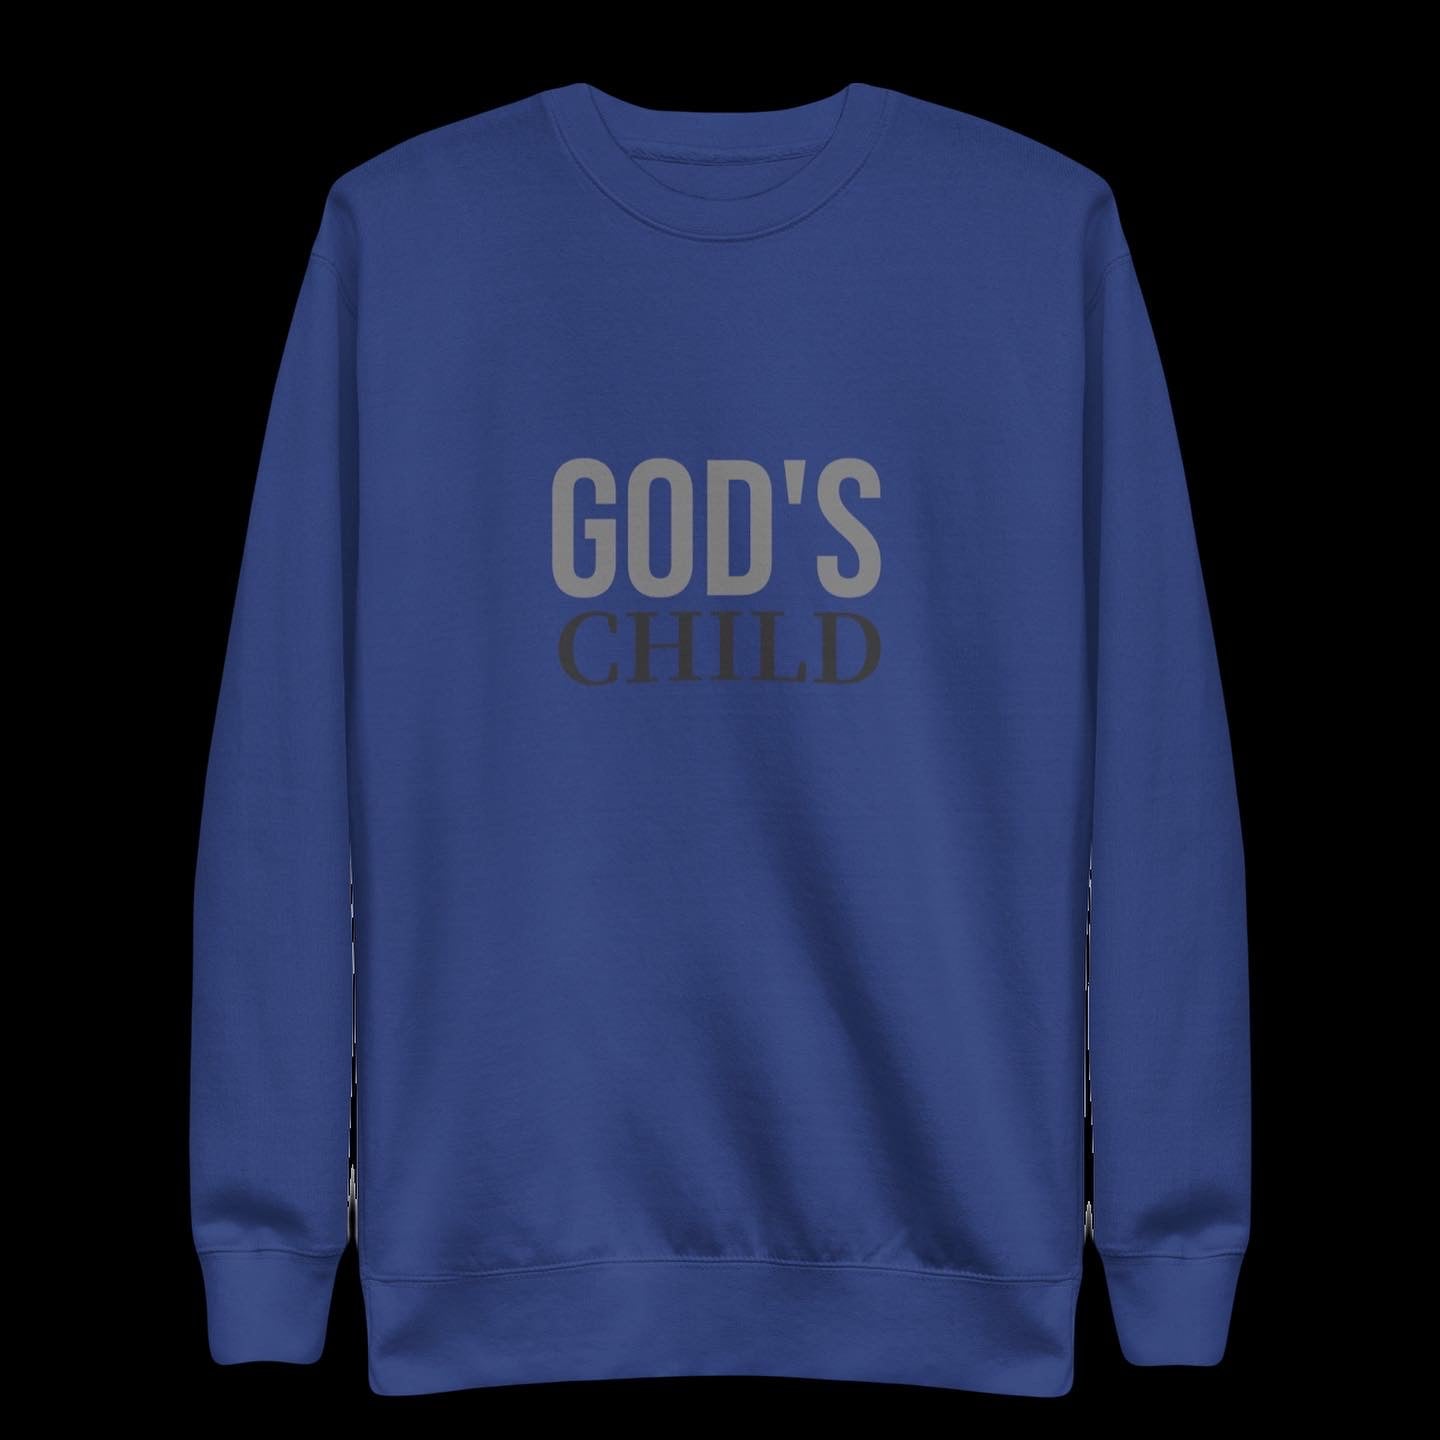 God's Child Sweater